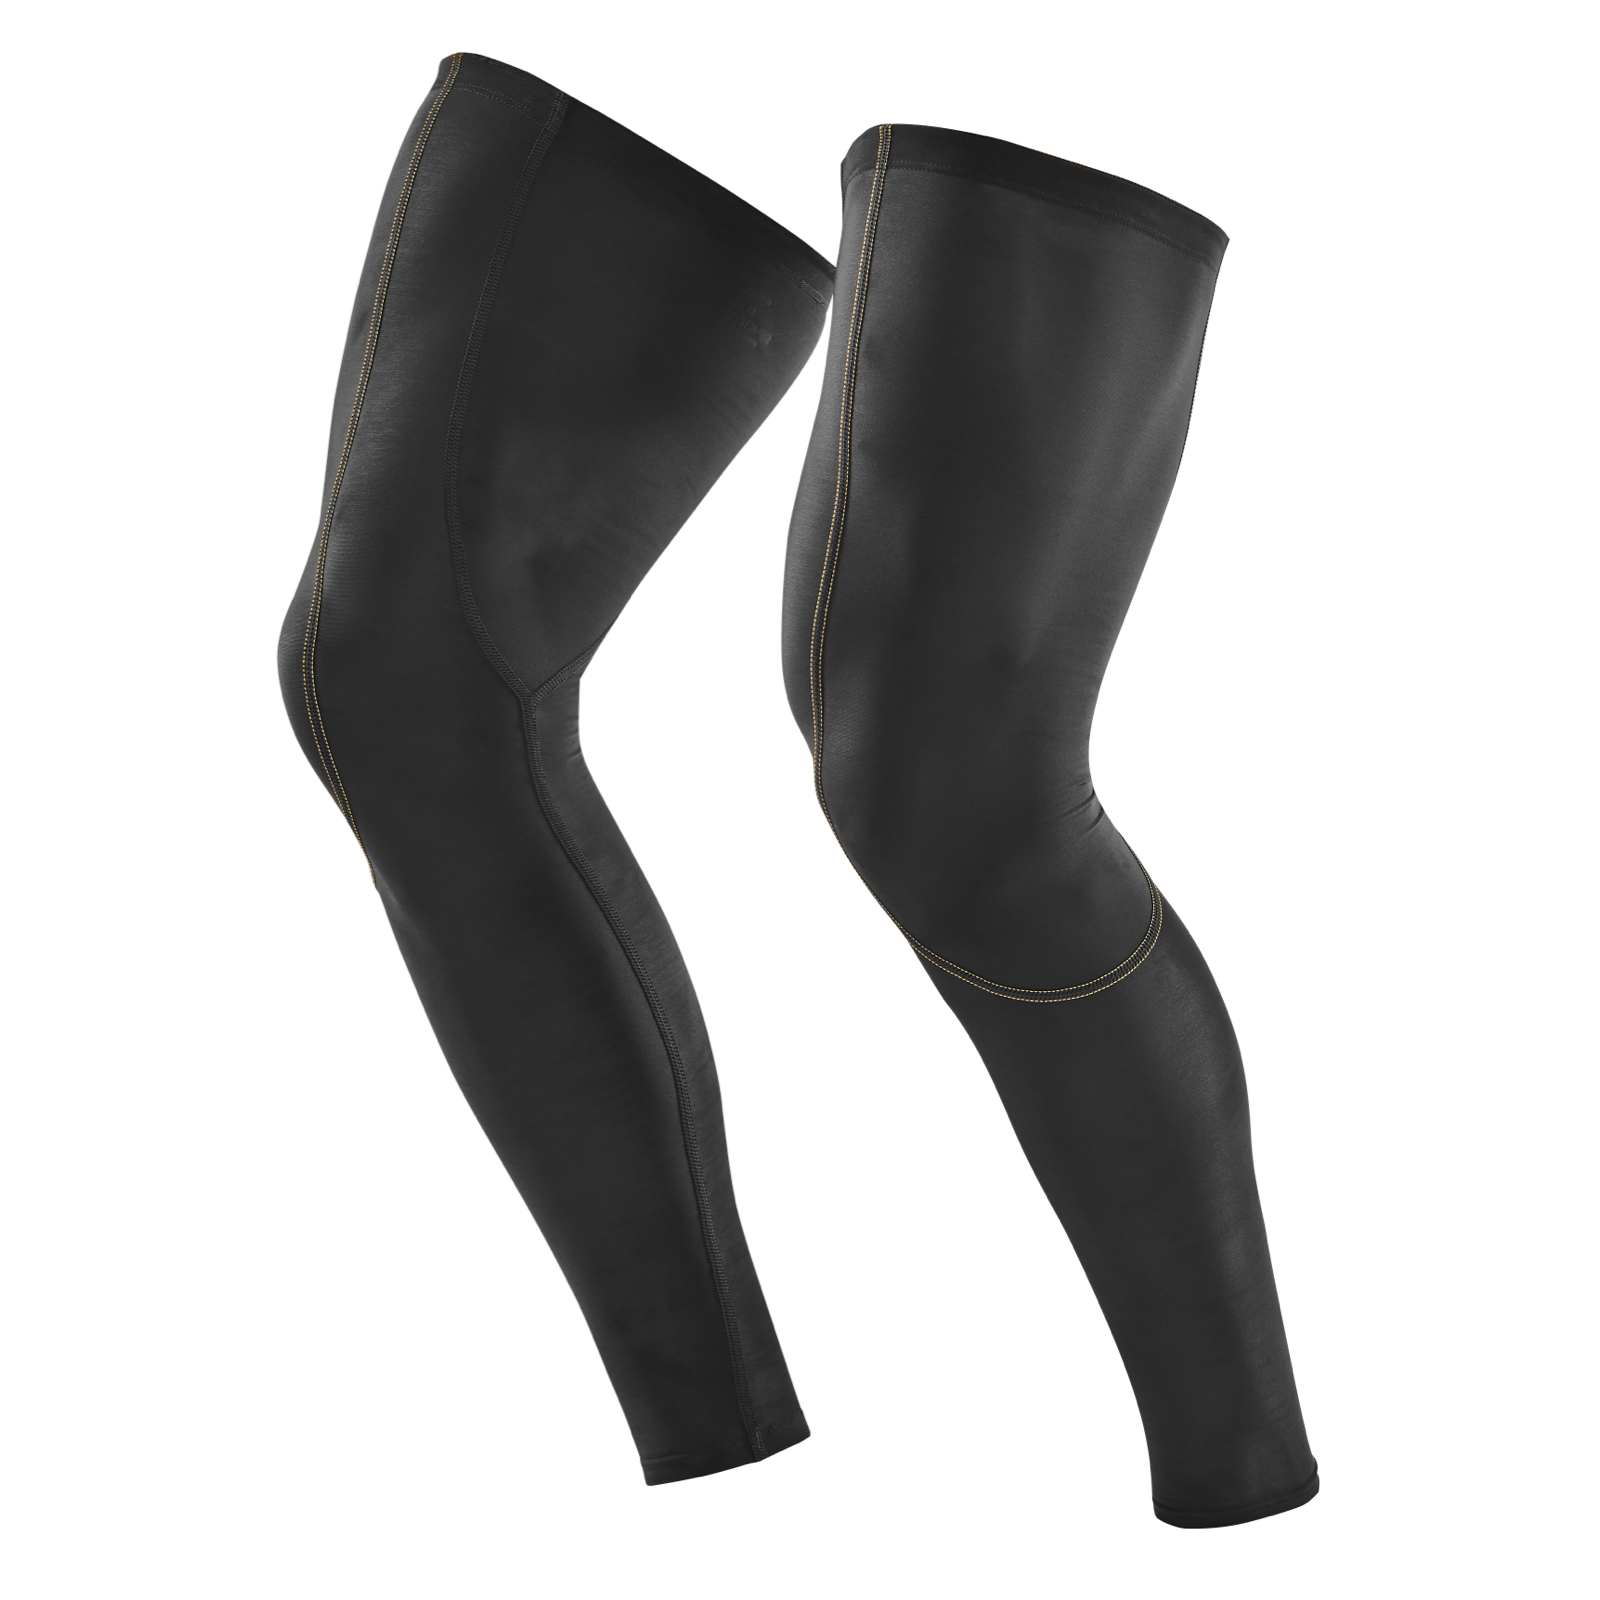 DI GRAZIA Black Large Size Pair of 2 Leg Compression Sleeves Women